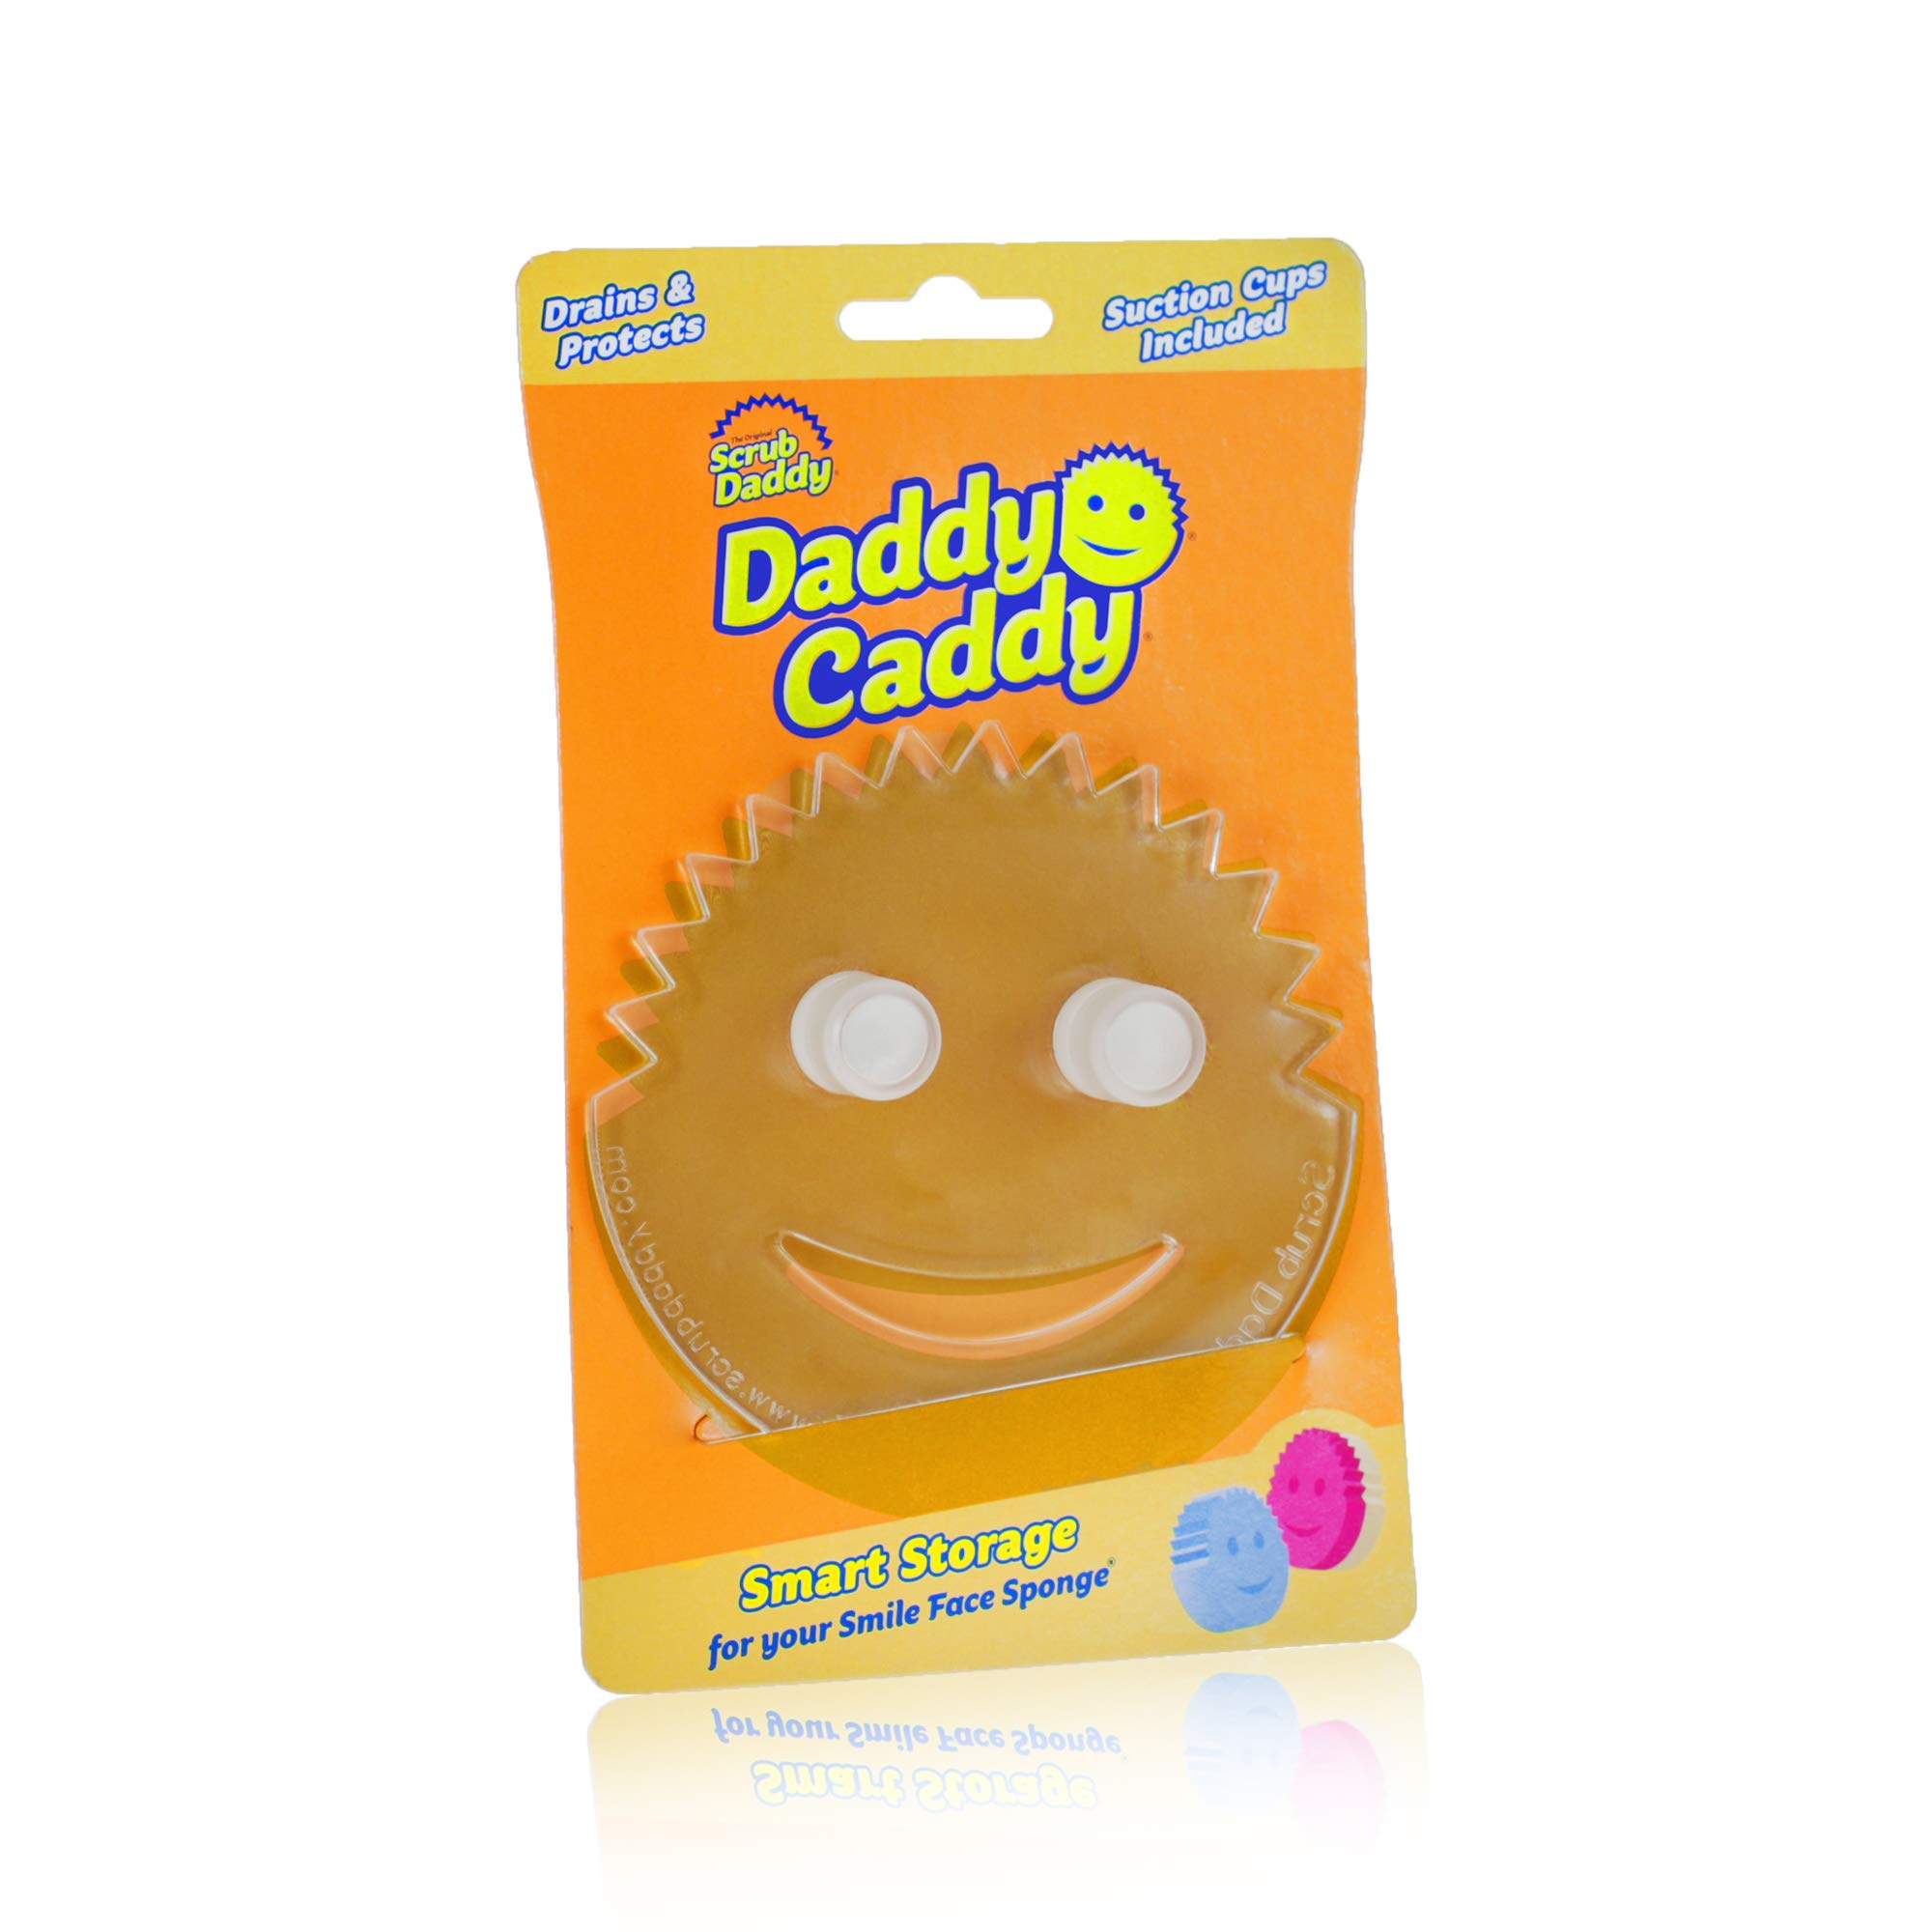 Scrub Daddy Sponge Holder - Daddy Caddy - Sink Sponge Holder with Suct –  MegabellaTreasures